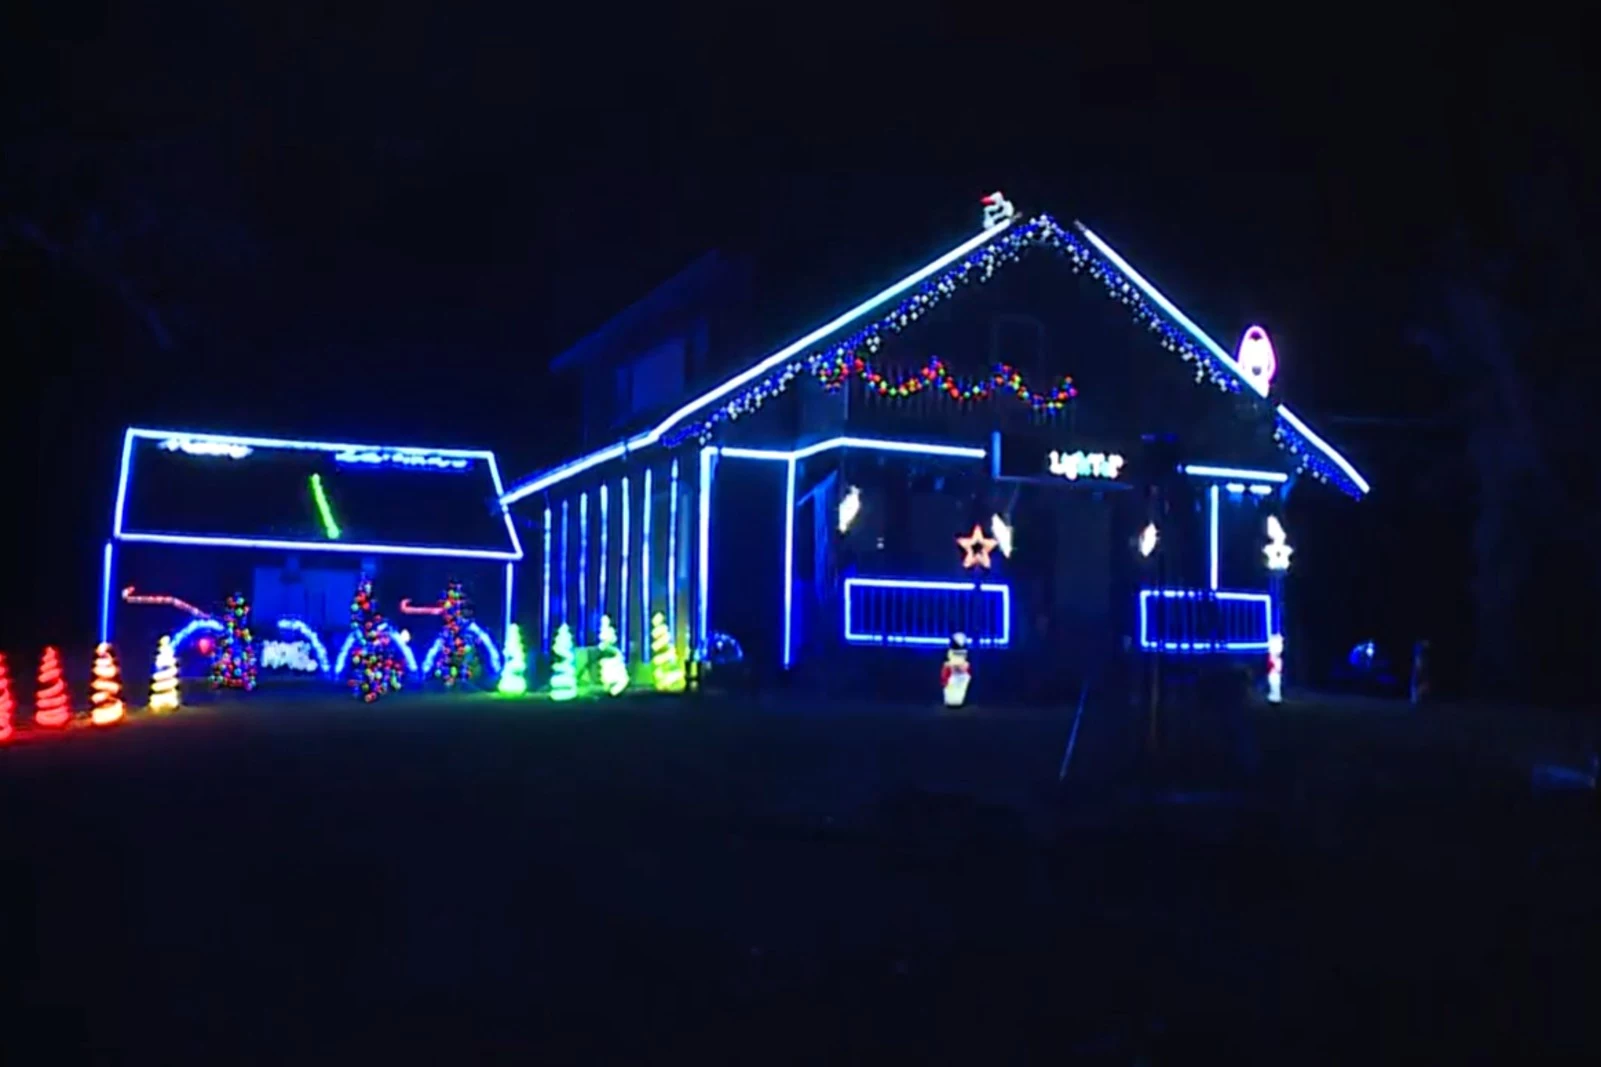 Fenton Home's Massive Holiday Display Has 80,000 Synchronized 